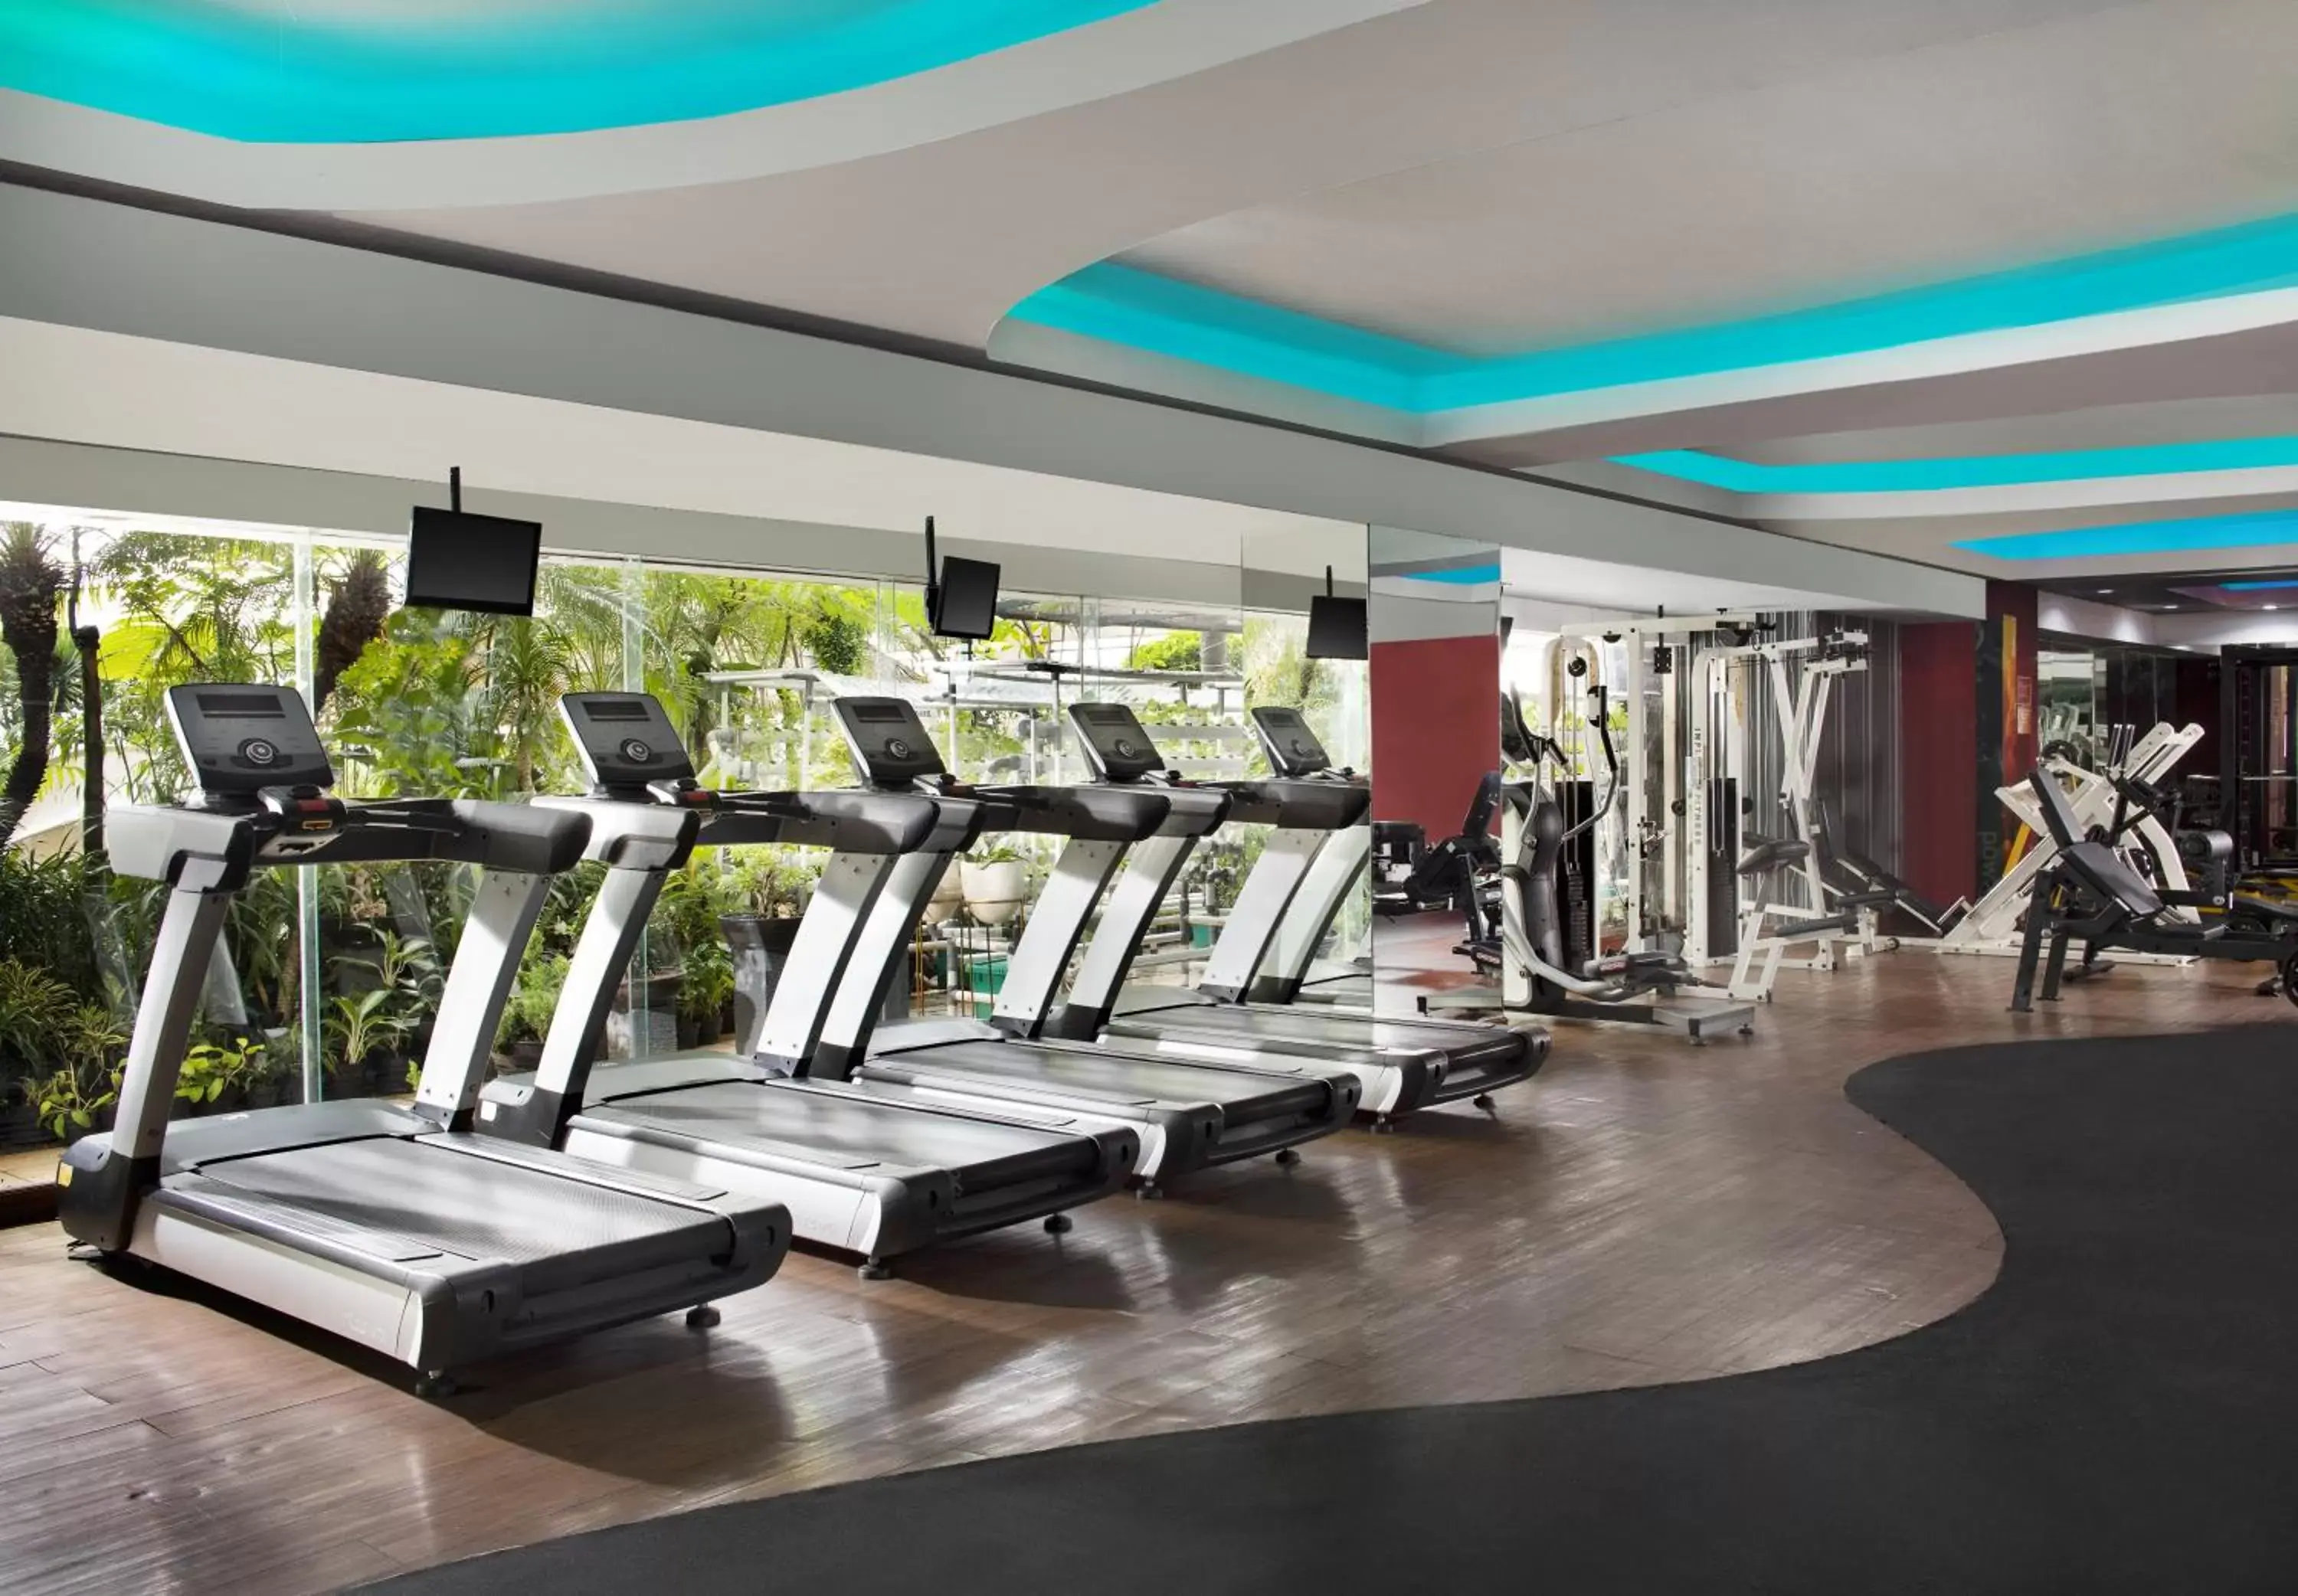 Fitness centre/facilities, Fitness Center/Facilities in Hotel Ciputra Jakarta managed by Swiss-Belhotel International